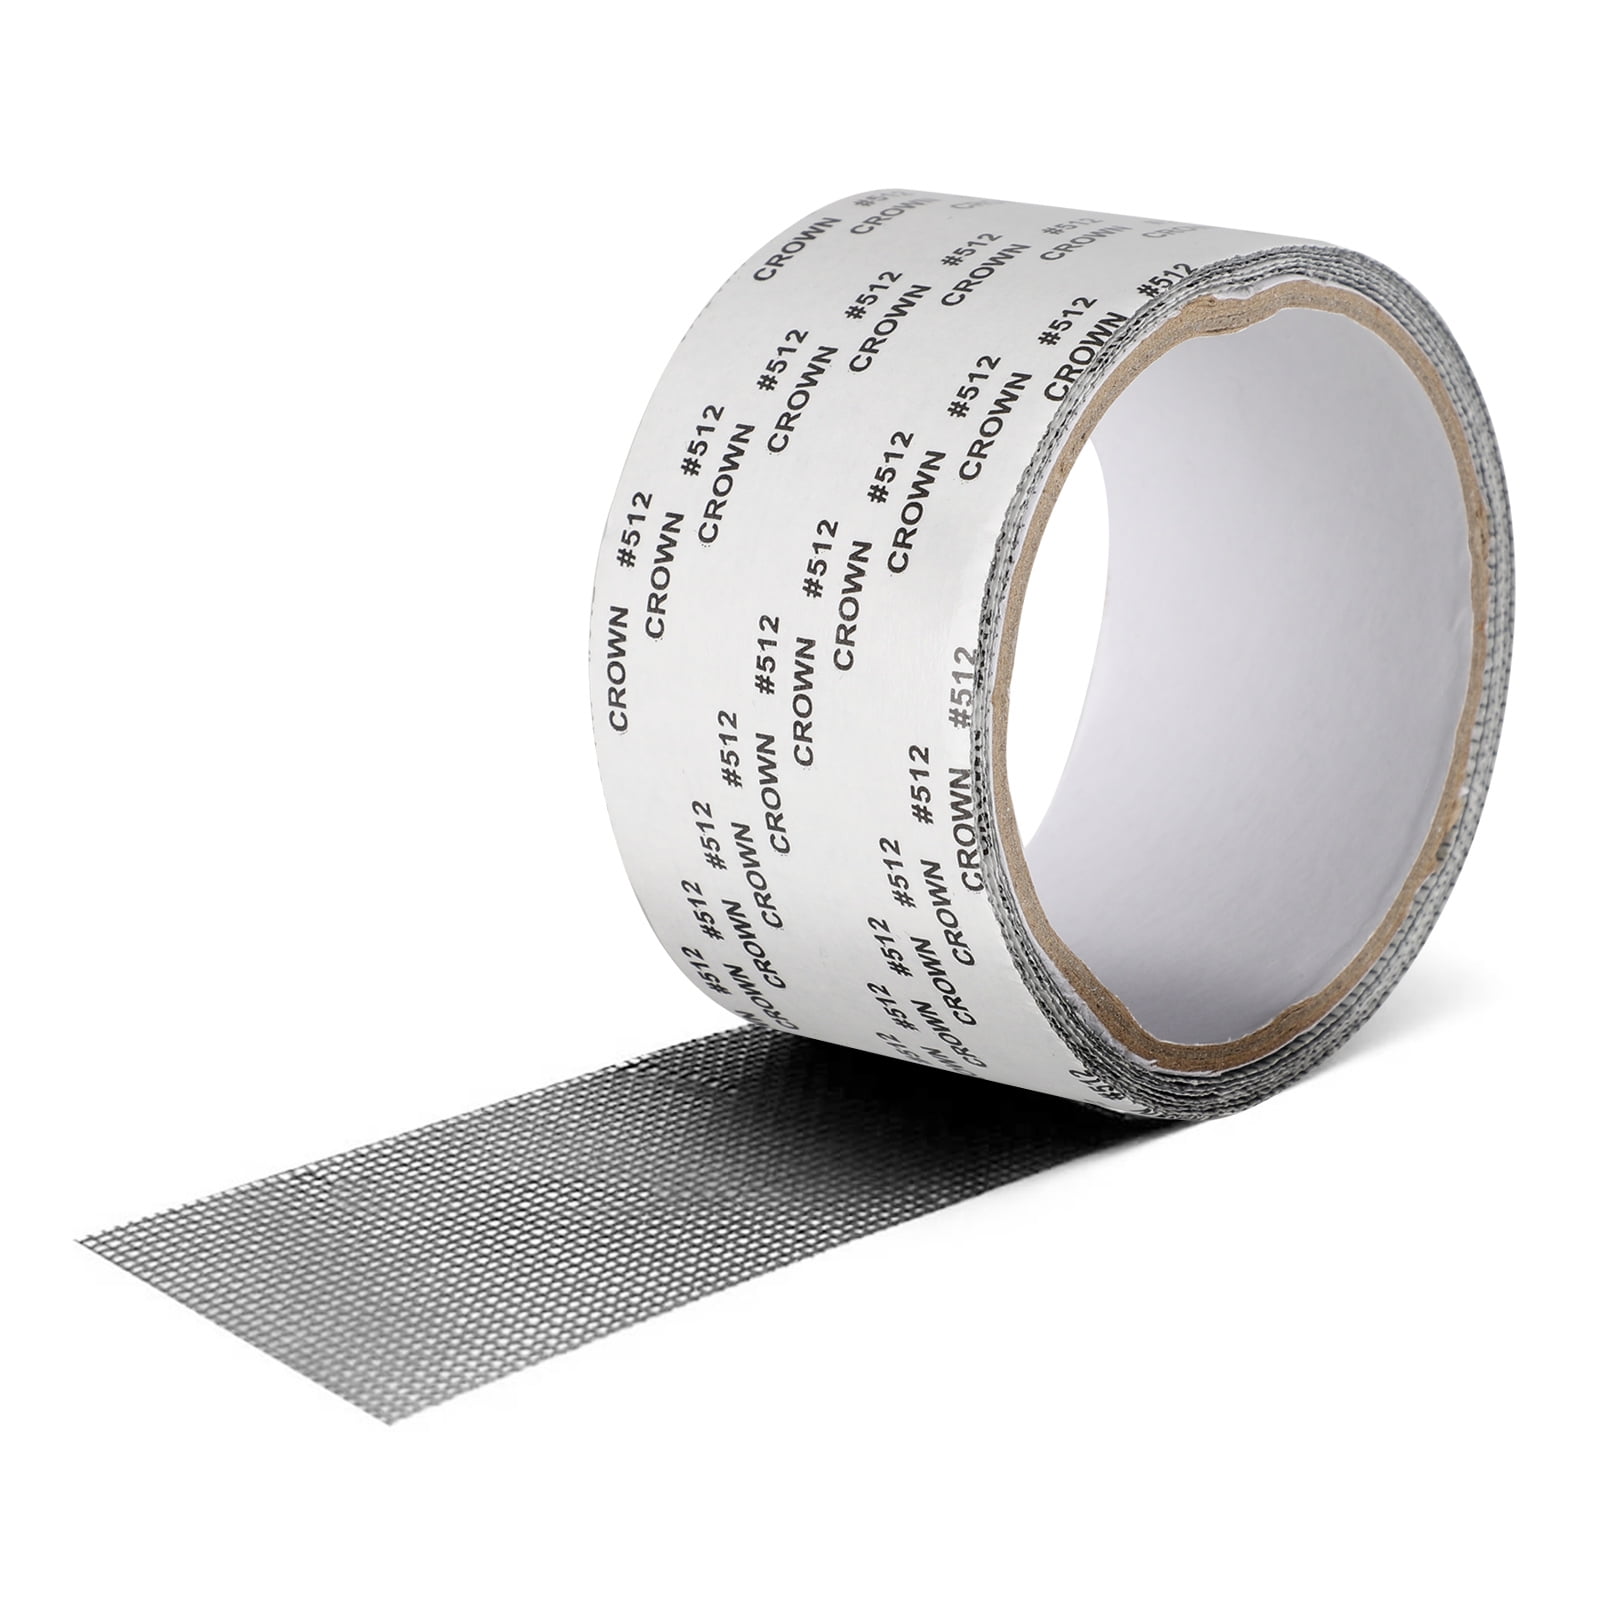 Window Screen Repair Tape Patch Adhesive Sticker Fiberglass Mesh Hole Fix Access